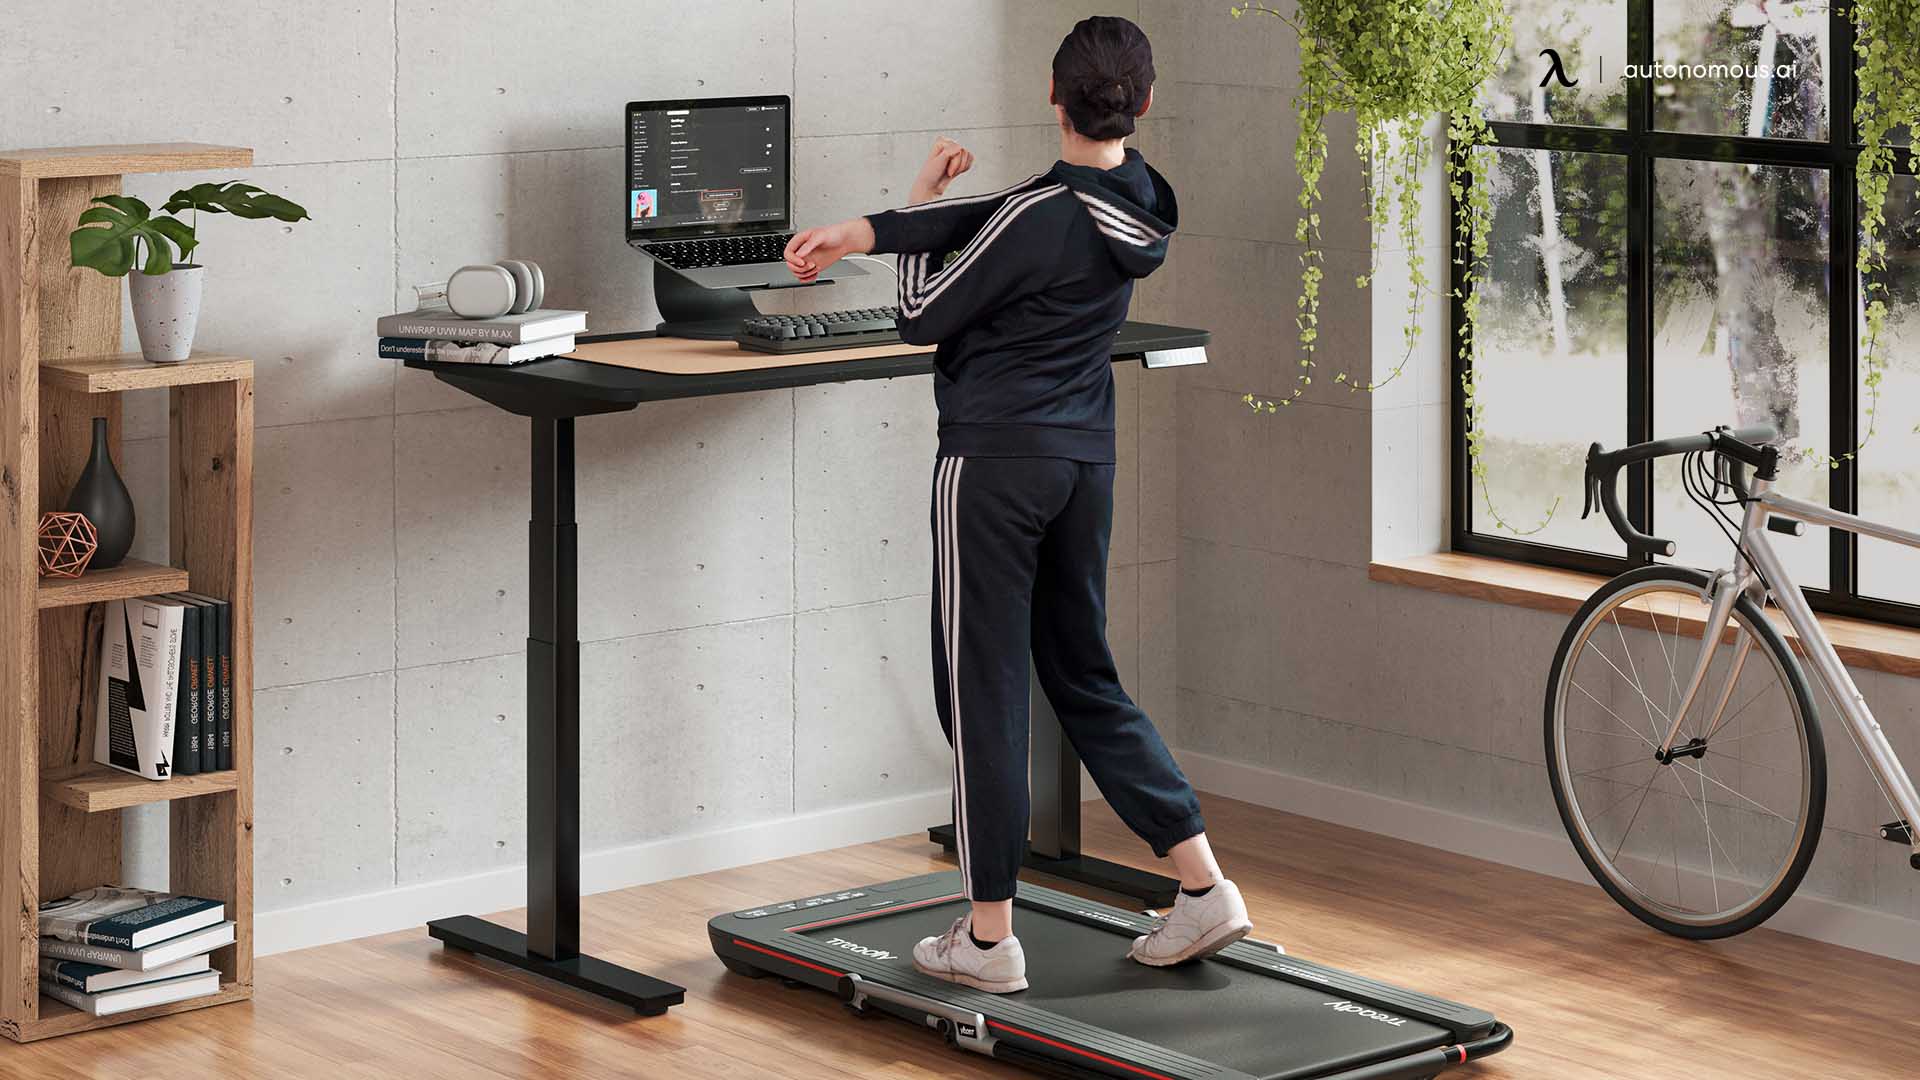 Folding Treadmill in home gym ideas